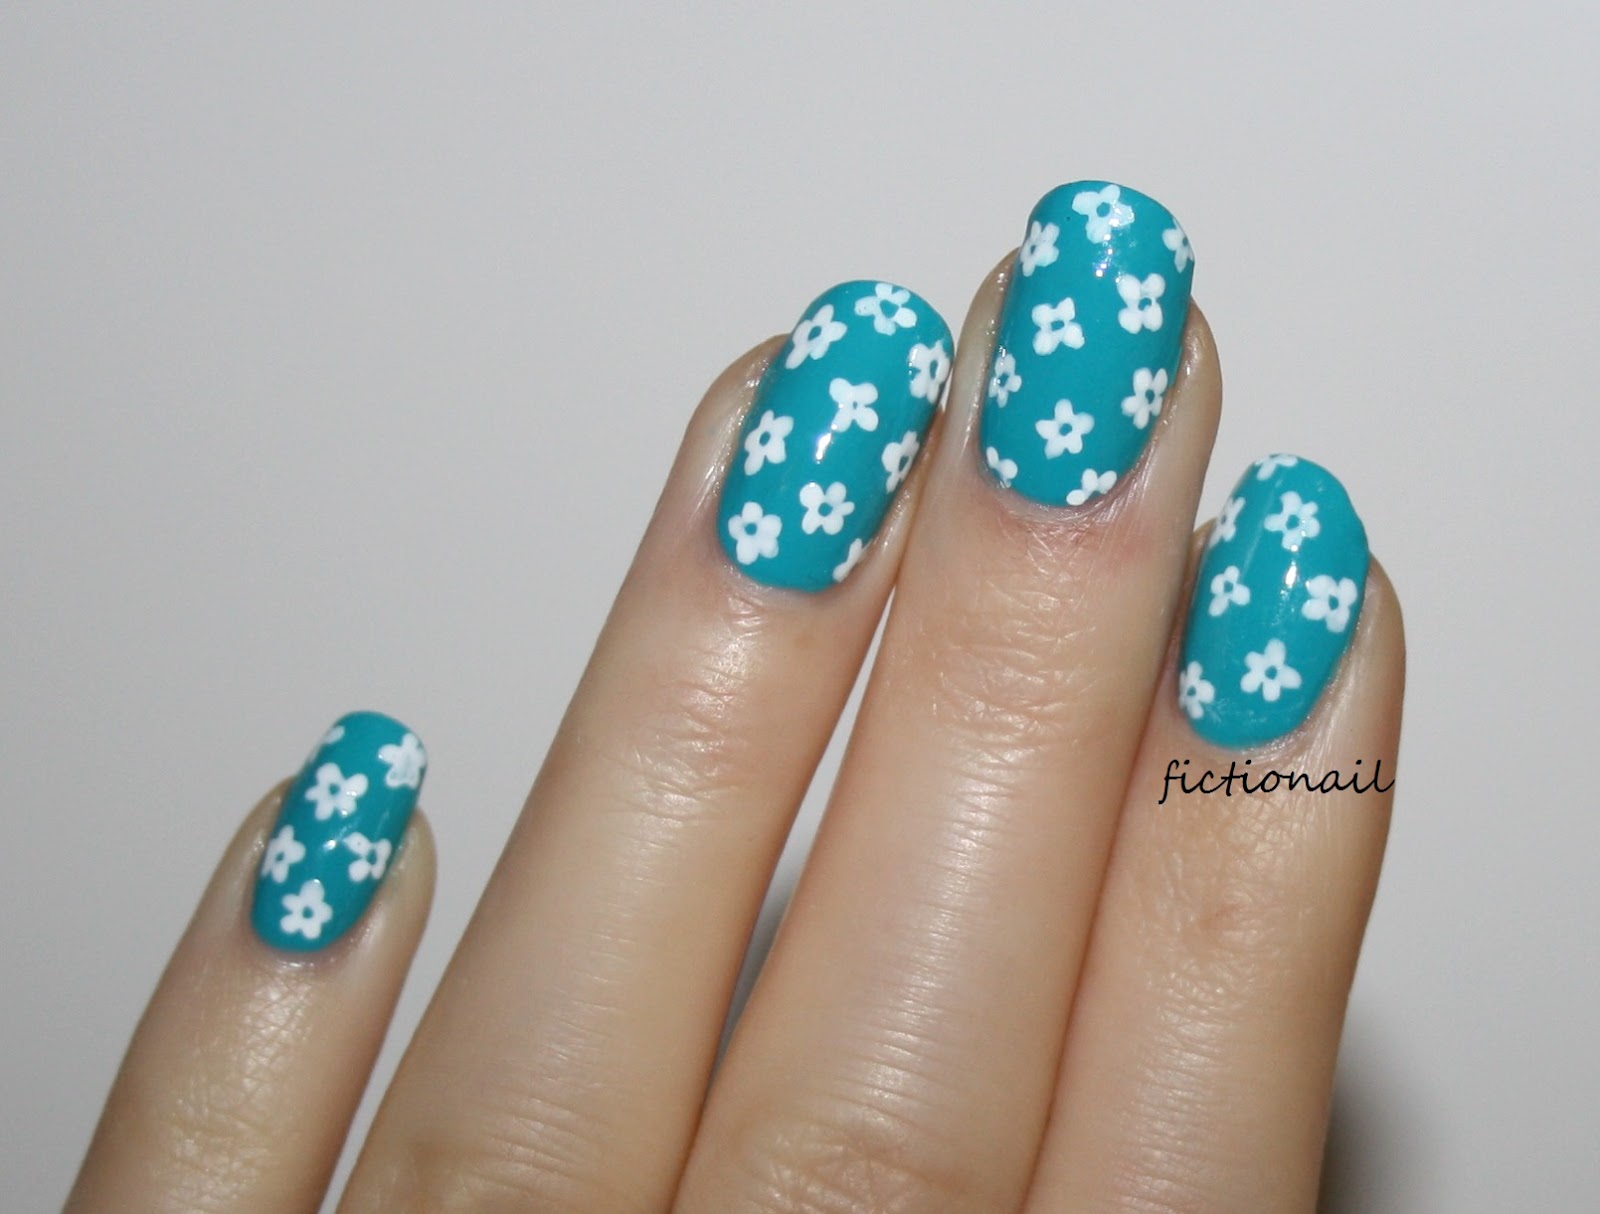 2. Simple corner flower nail design - wide 10